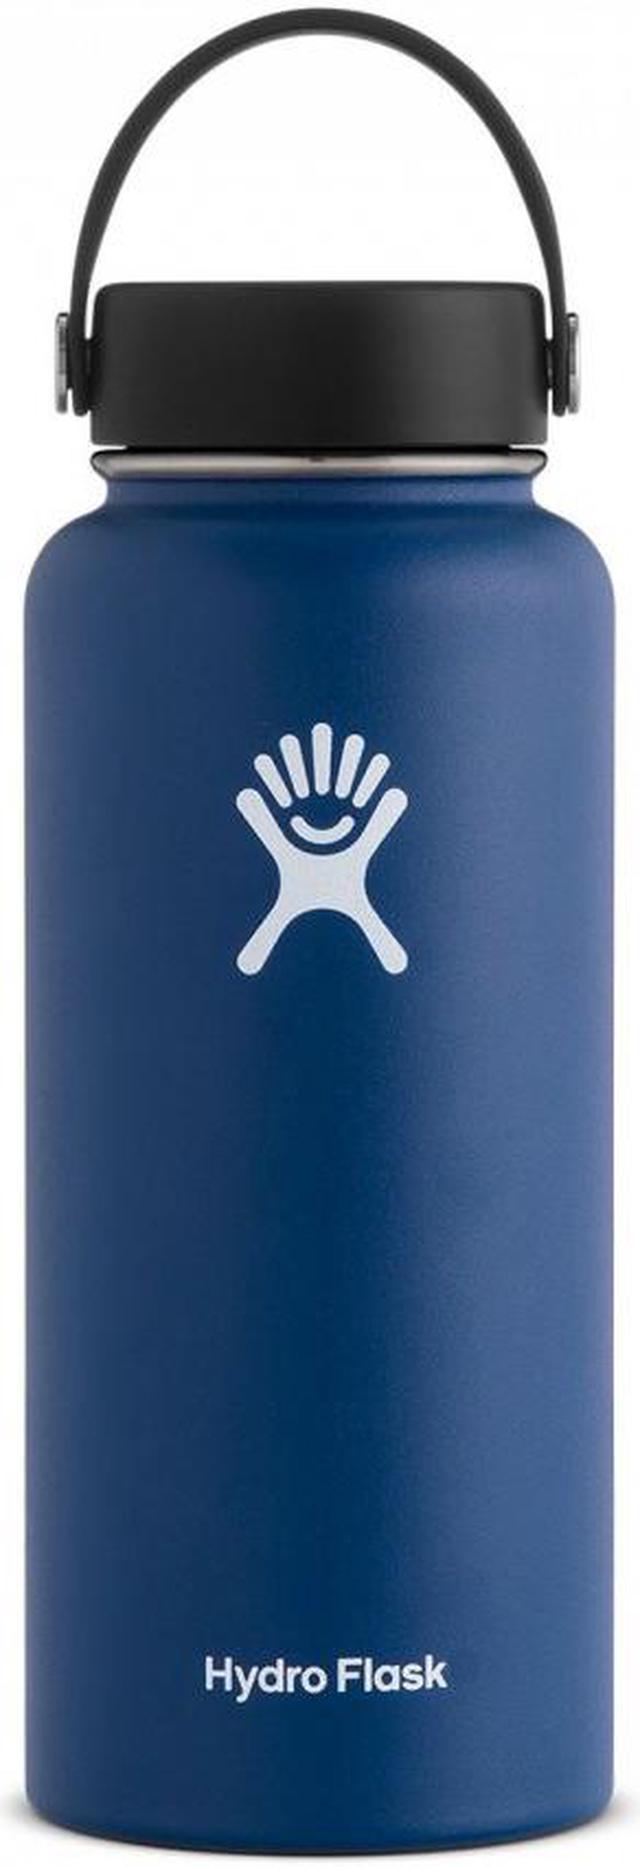 Hydro Flask Blue Wide Mouth Bottle, 32 oz Hydro Flask